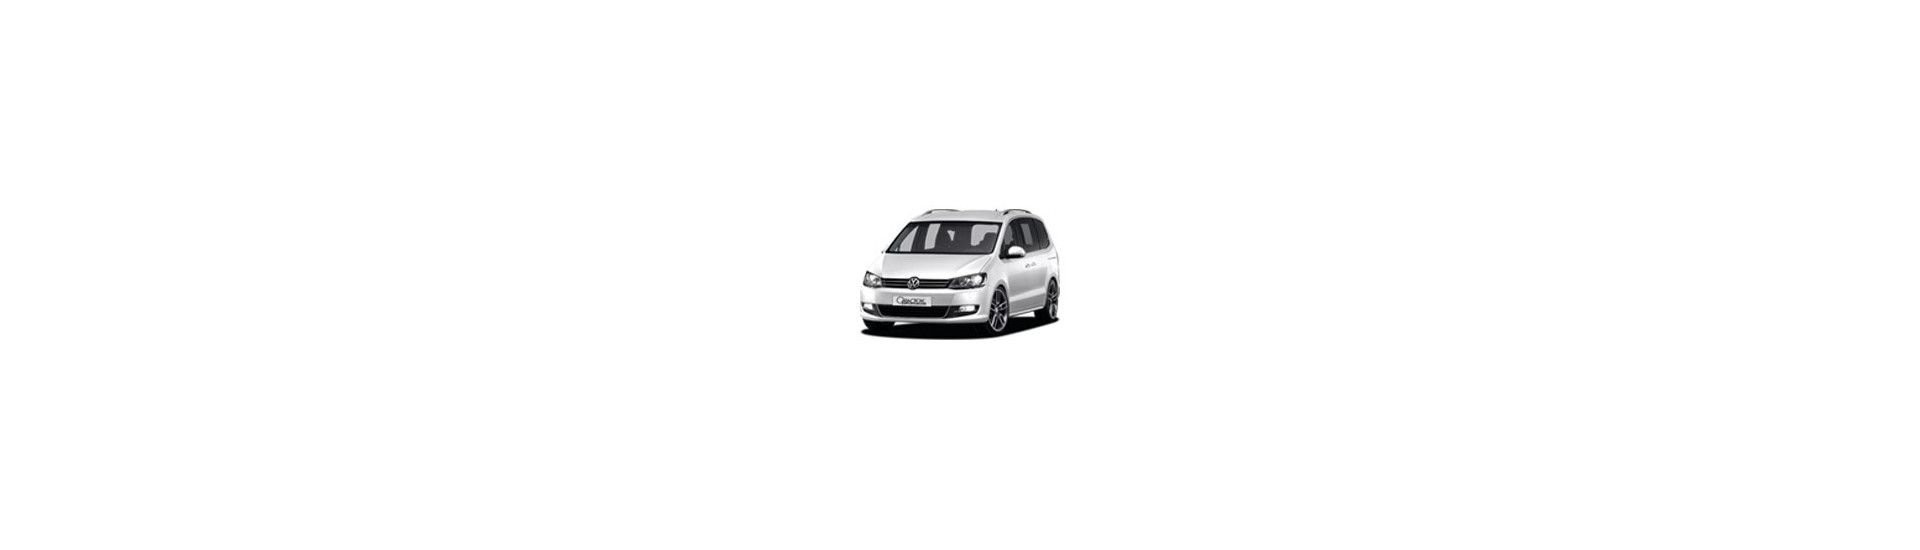 Cauti navigatie pentru Volkswagen Sharan? Incearca produsele Caraudiomarket